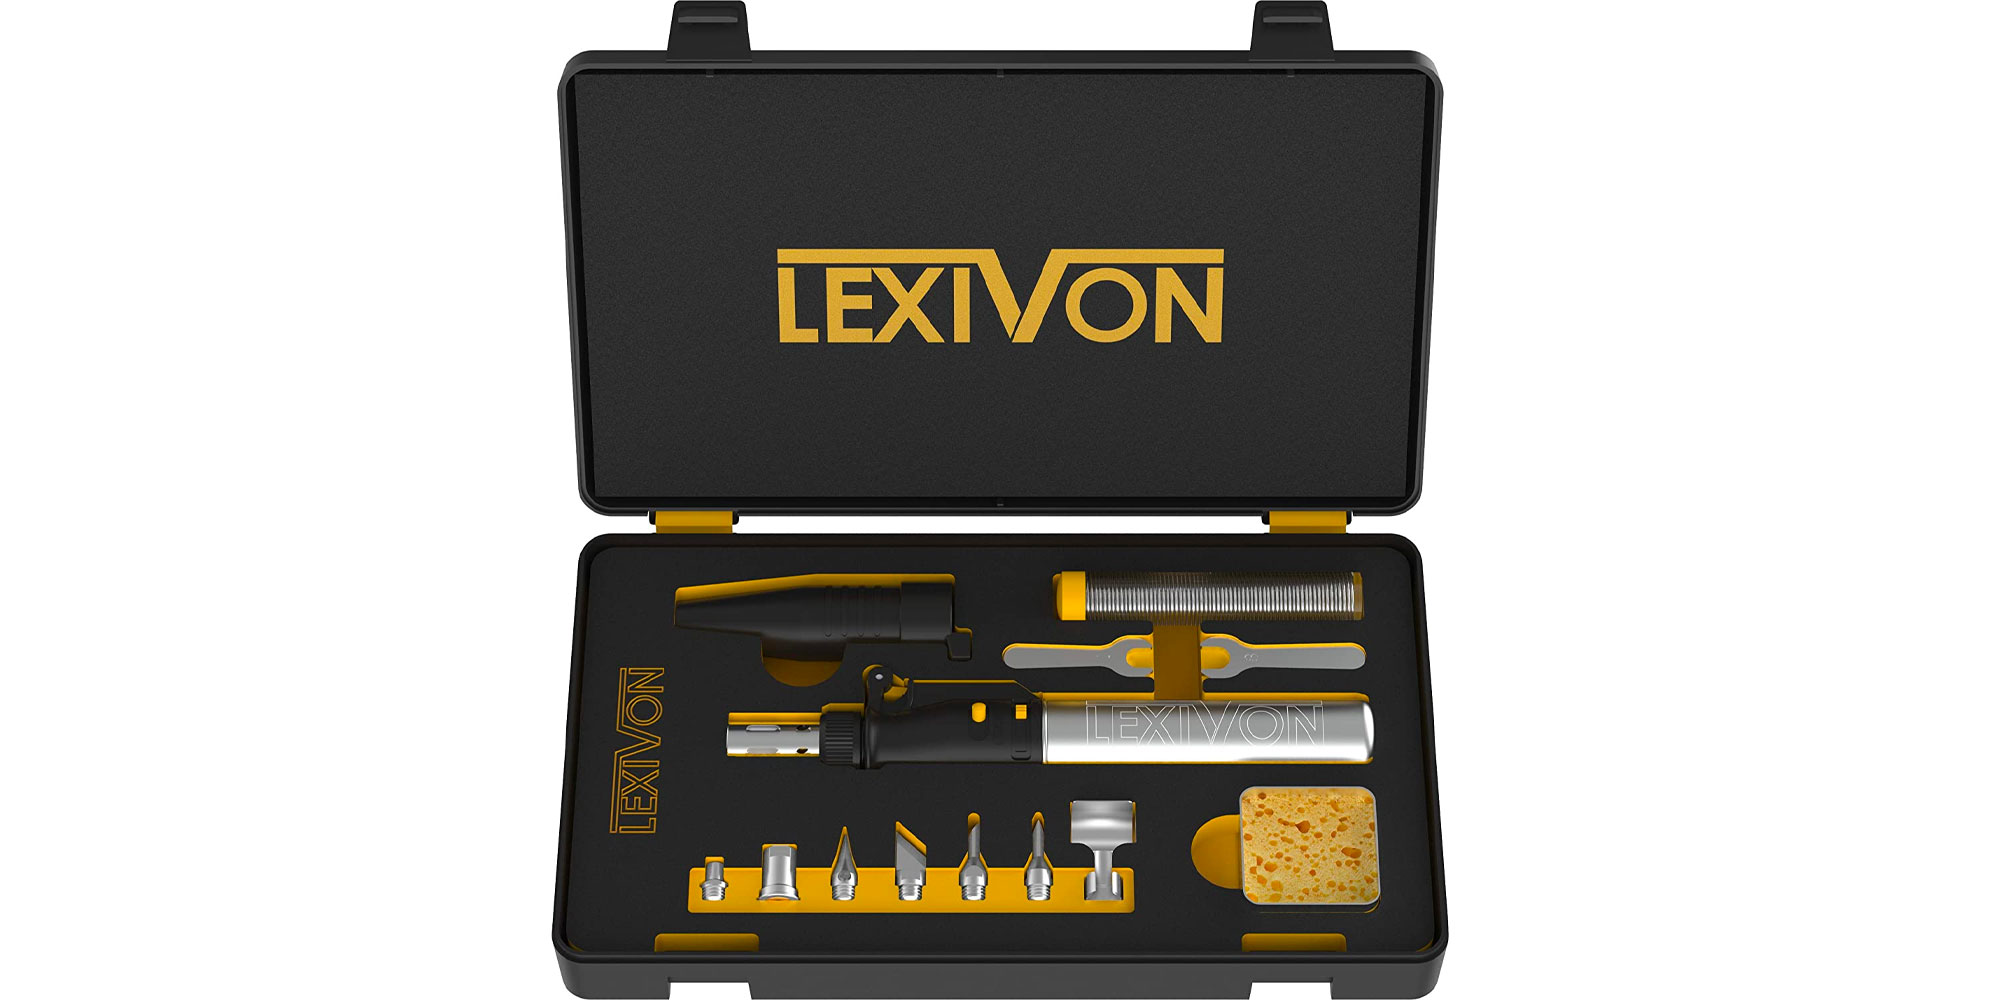 LEXIVON's #1 best-selling butane soldering iron hits $24.50, more